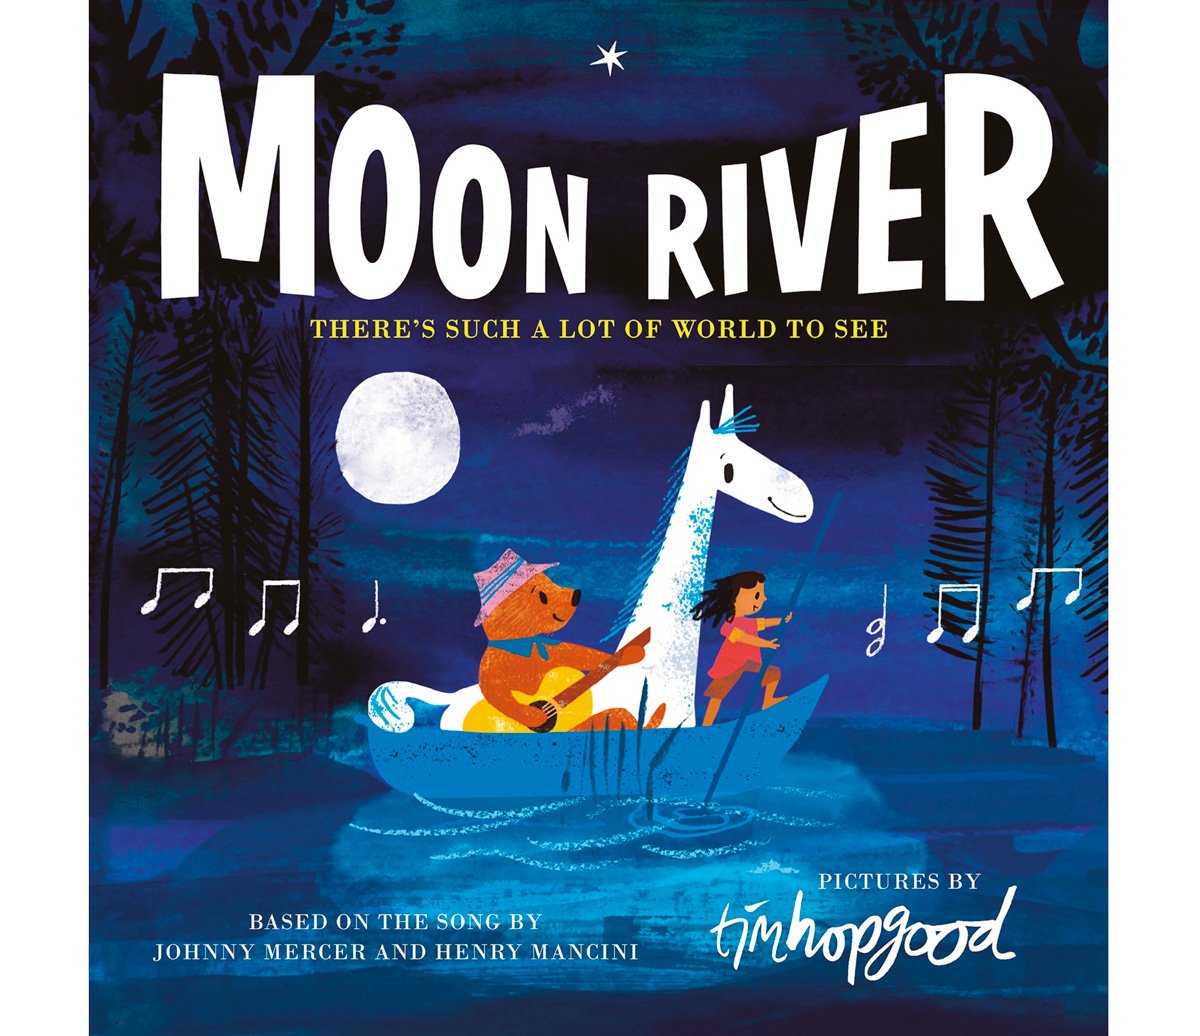 tim-hopgood-moon-river-cover-illustration.jpg